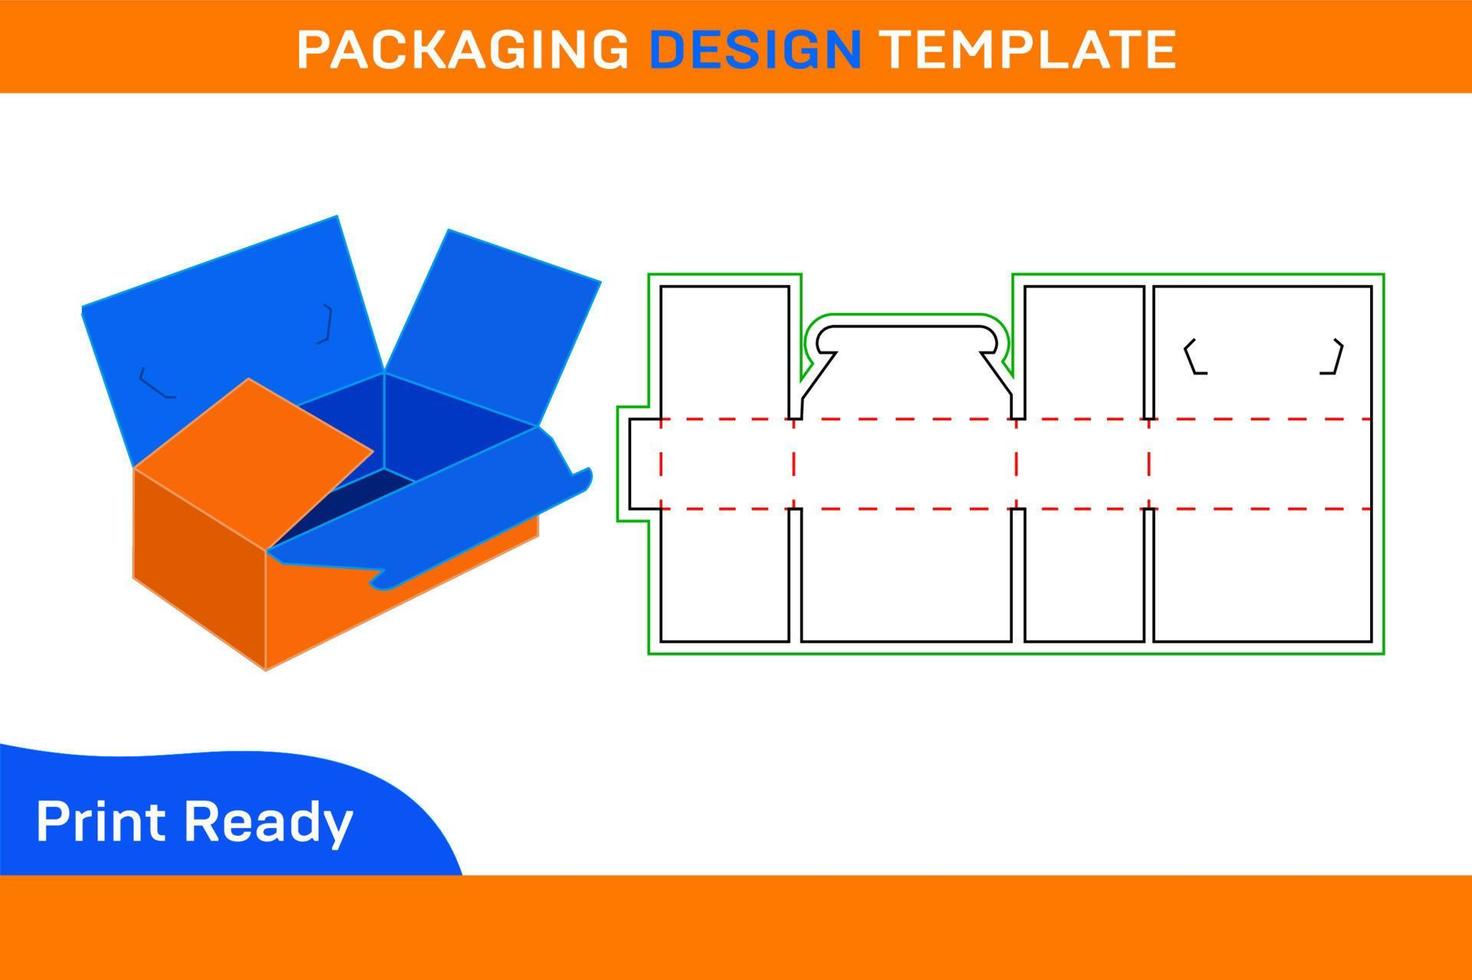 Folding cardboard FEFRCO218,corrugated carton box,resizable 3d vector dieline template